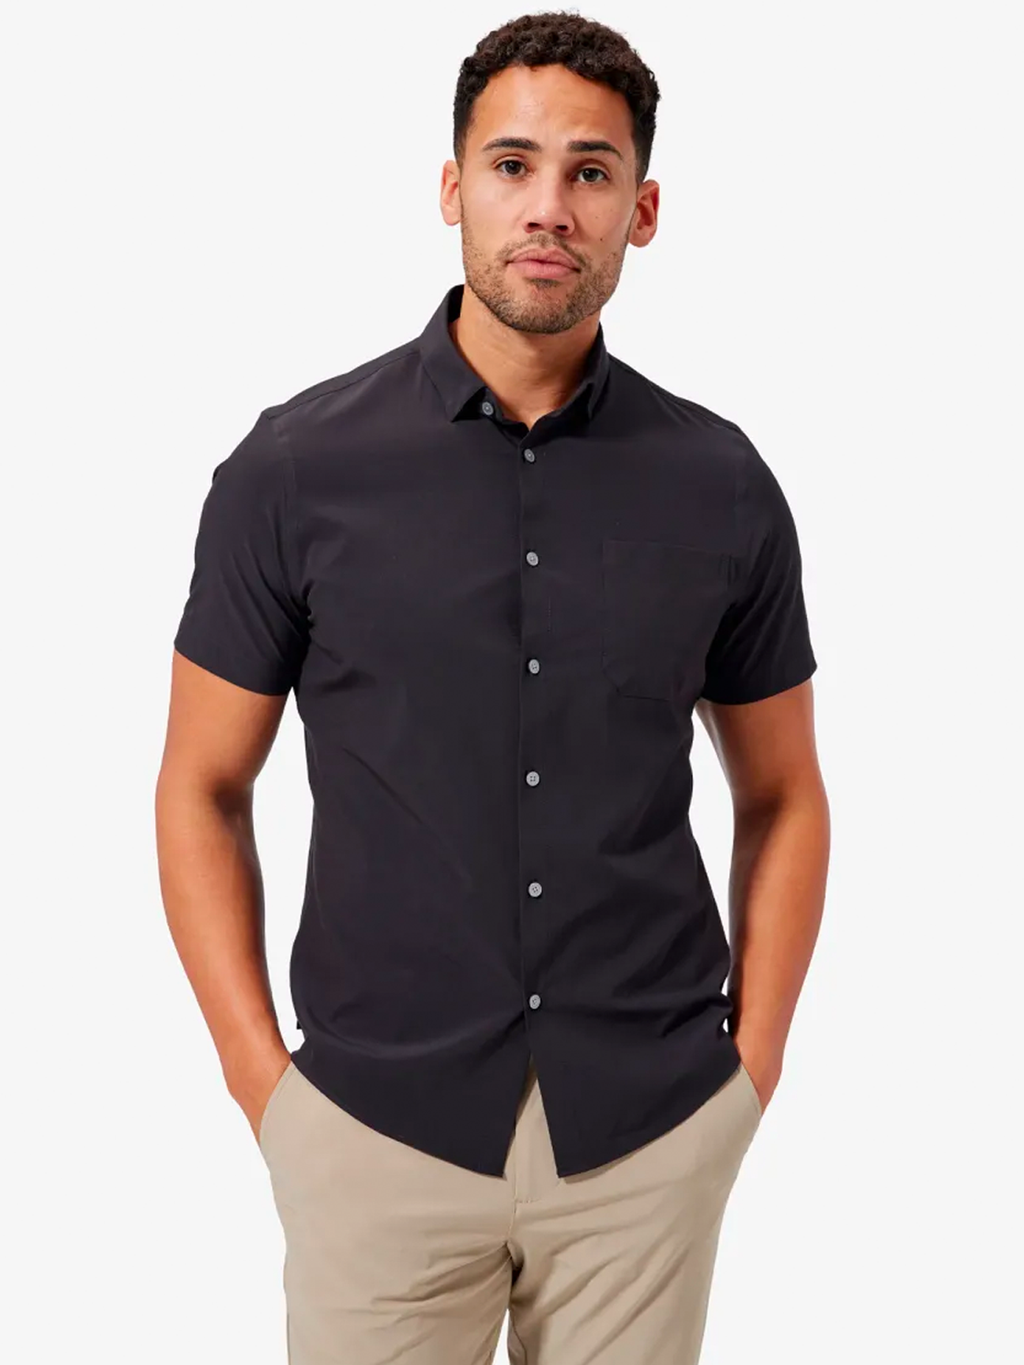 Leeward Short Sleeve Shirt in Black